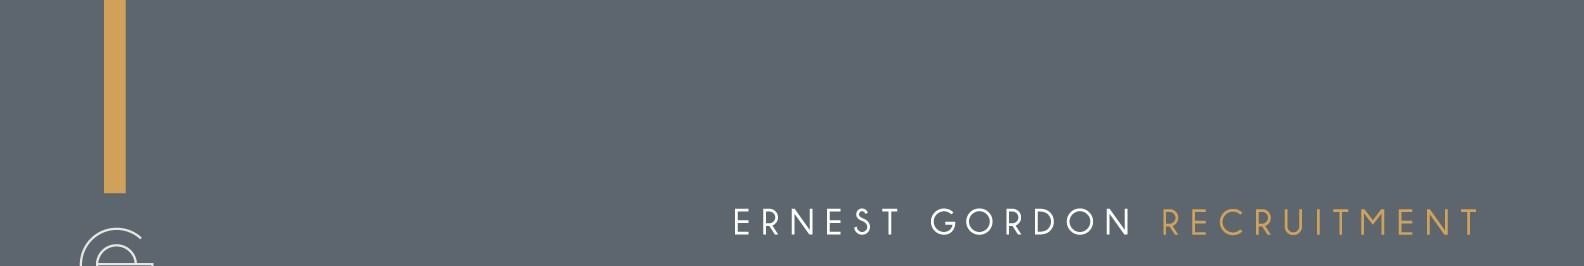 Ernest Gordon Recruitment Limited background